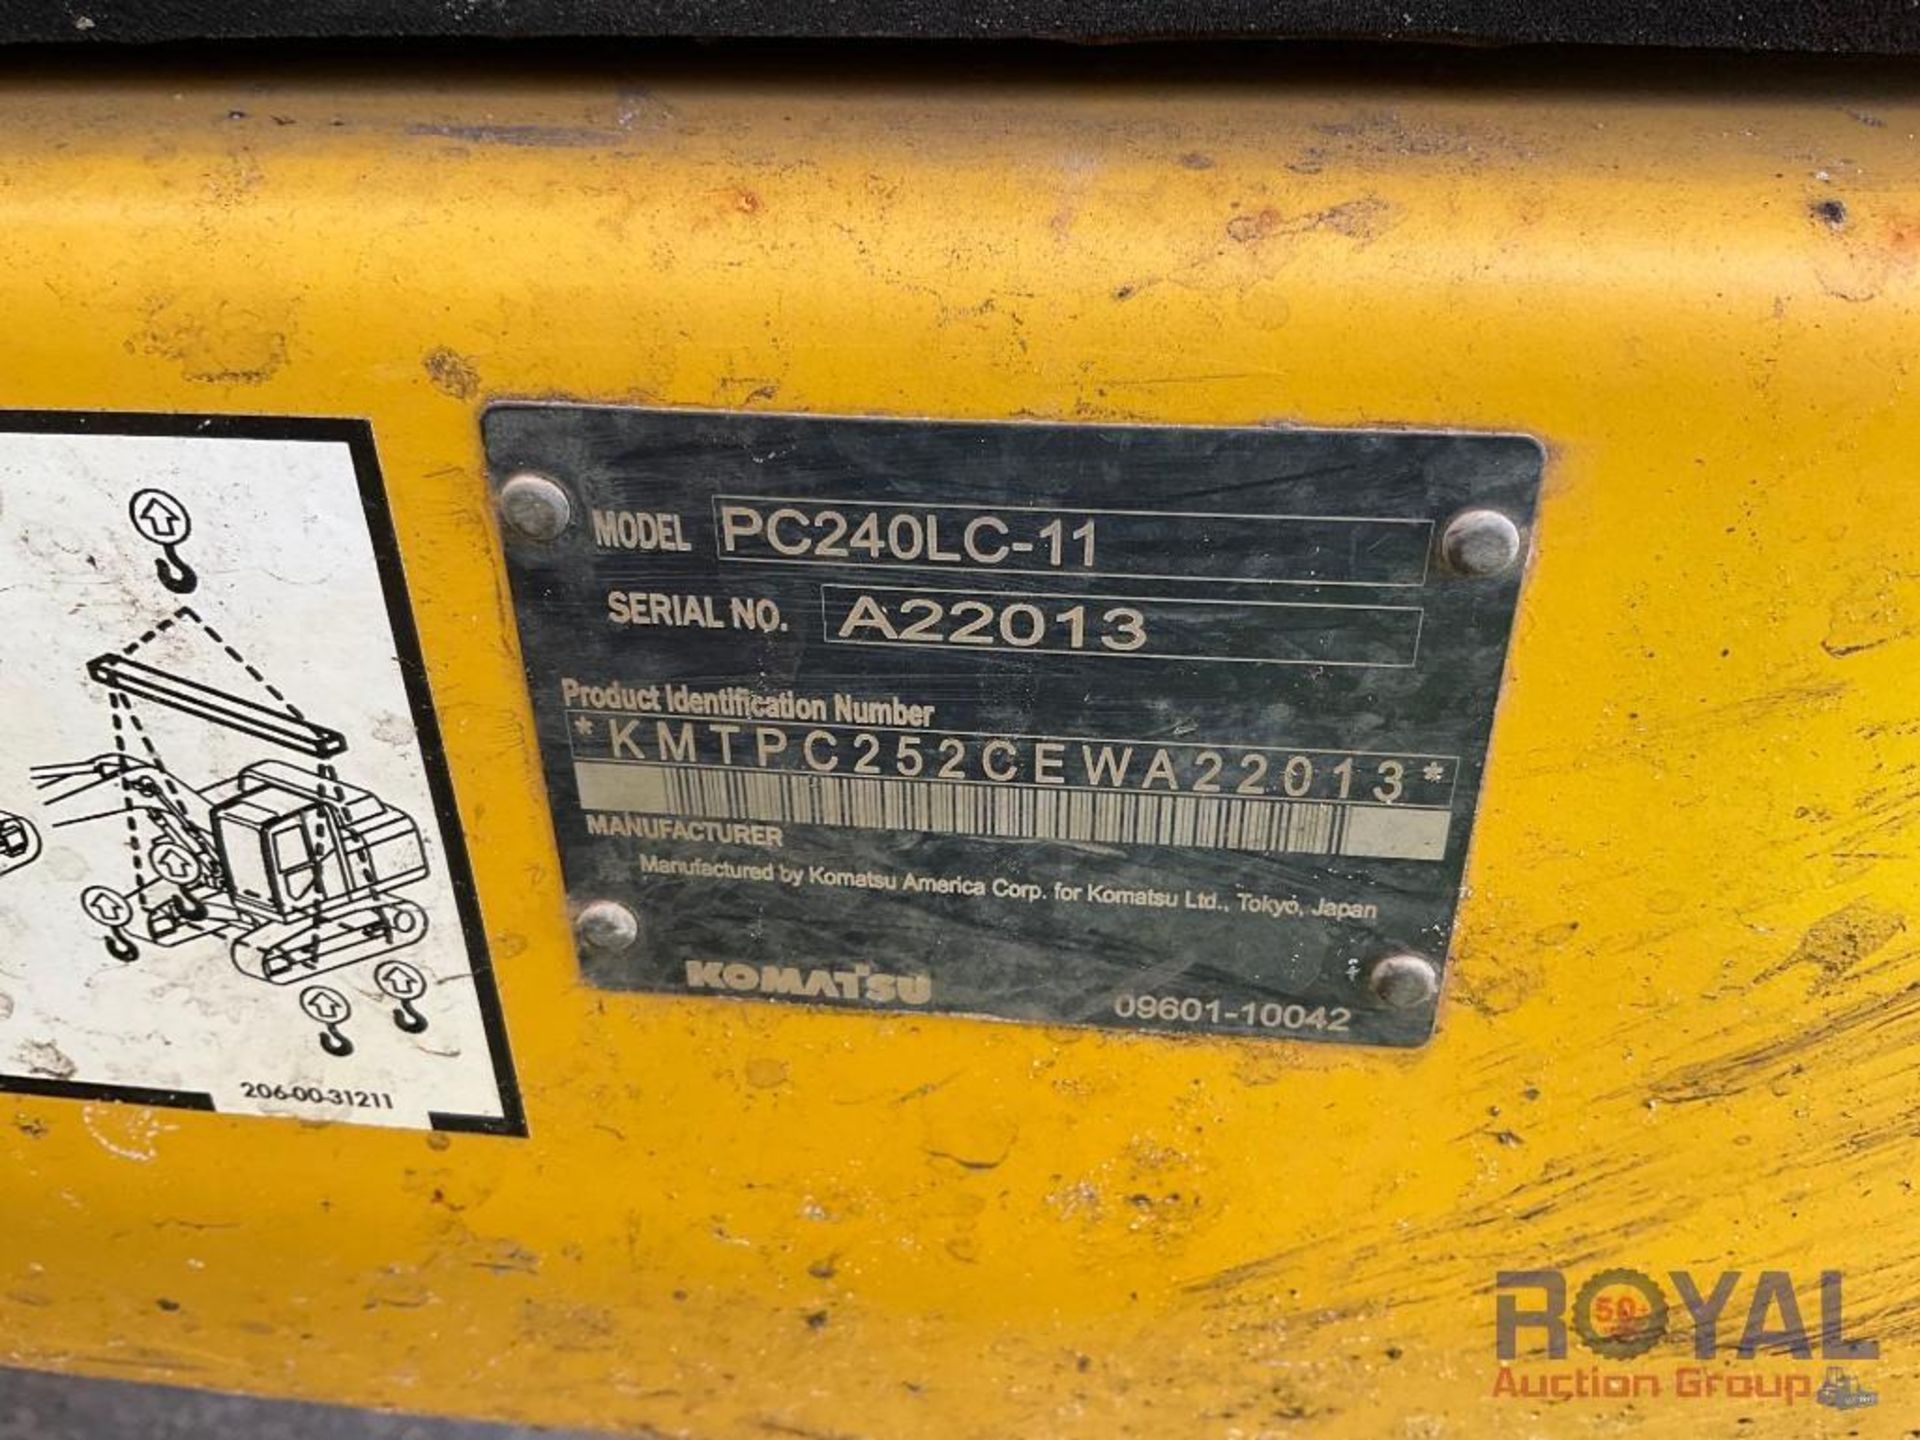 2015 Komatsu PC240LC-11 Hydraulic Excavator - Image 5 of 39